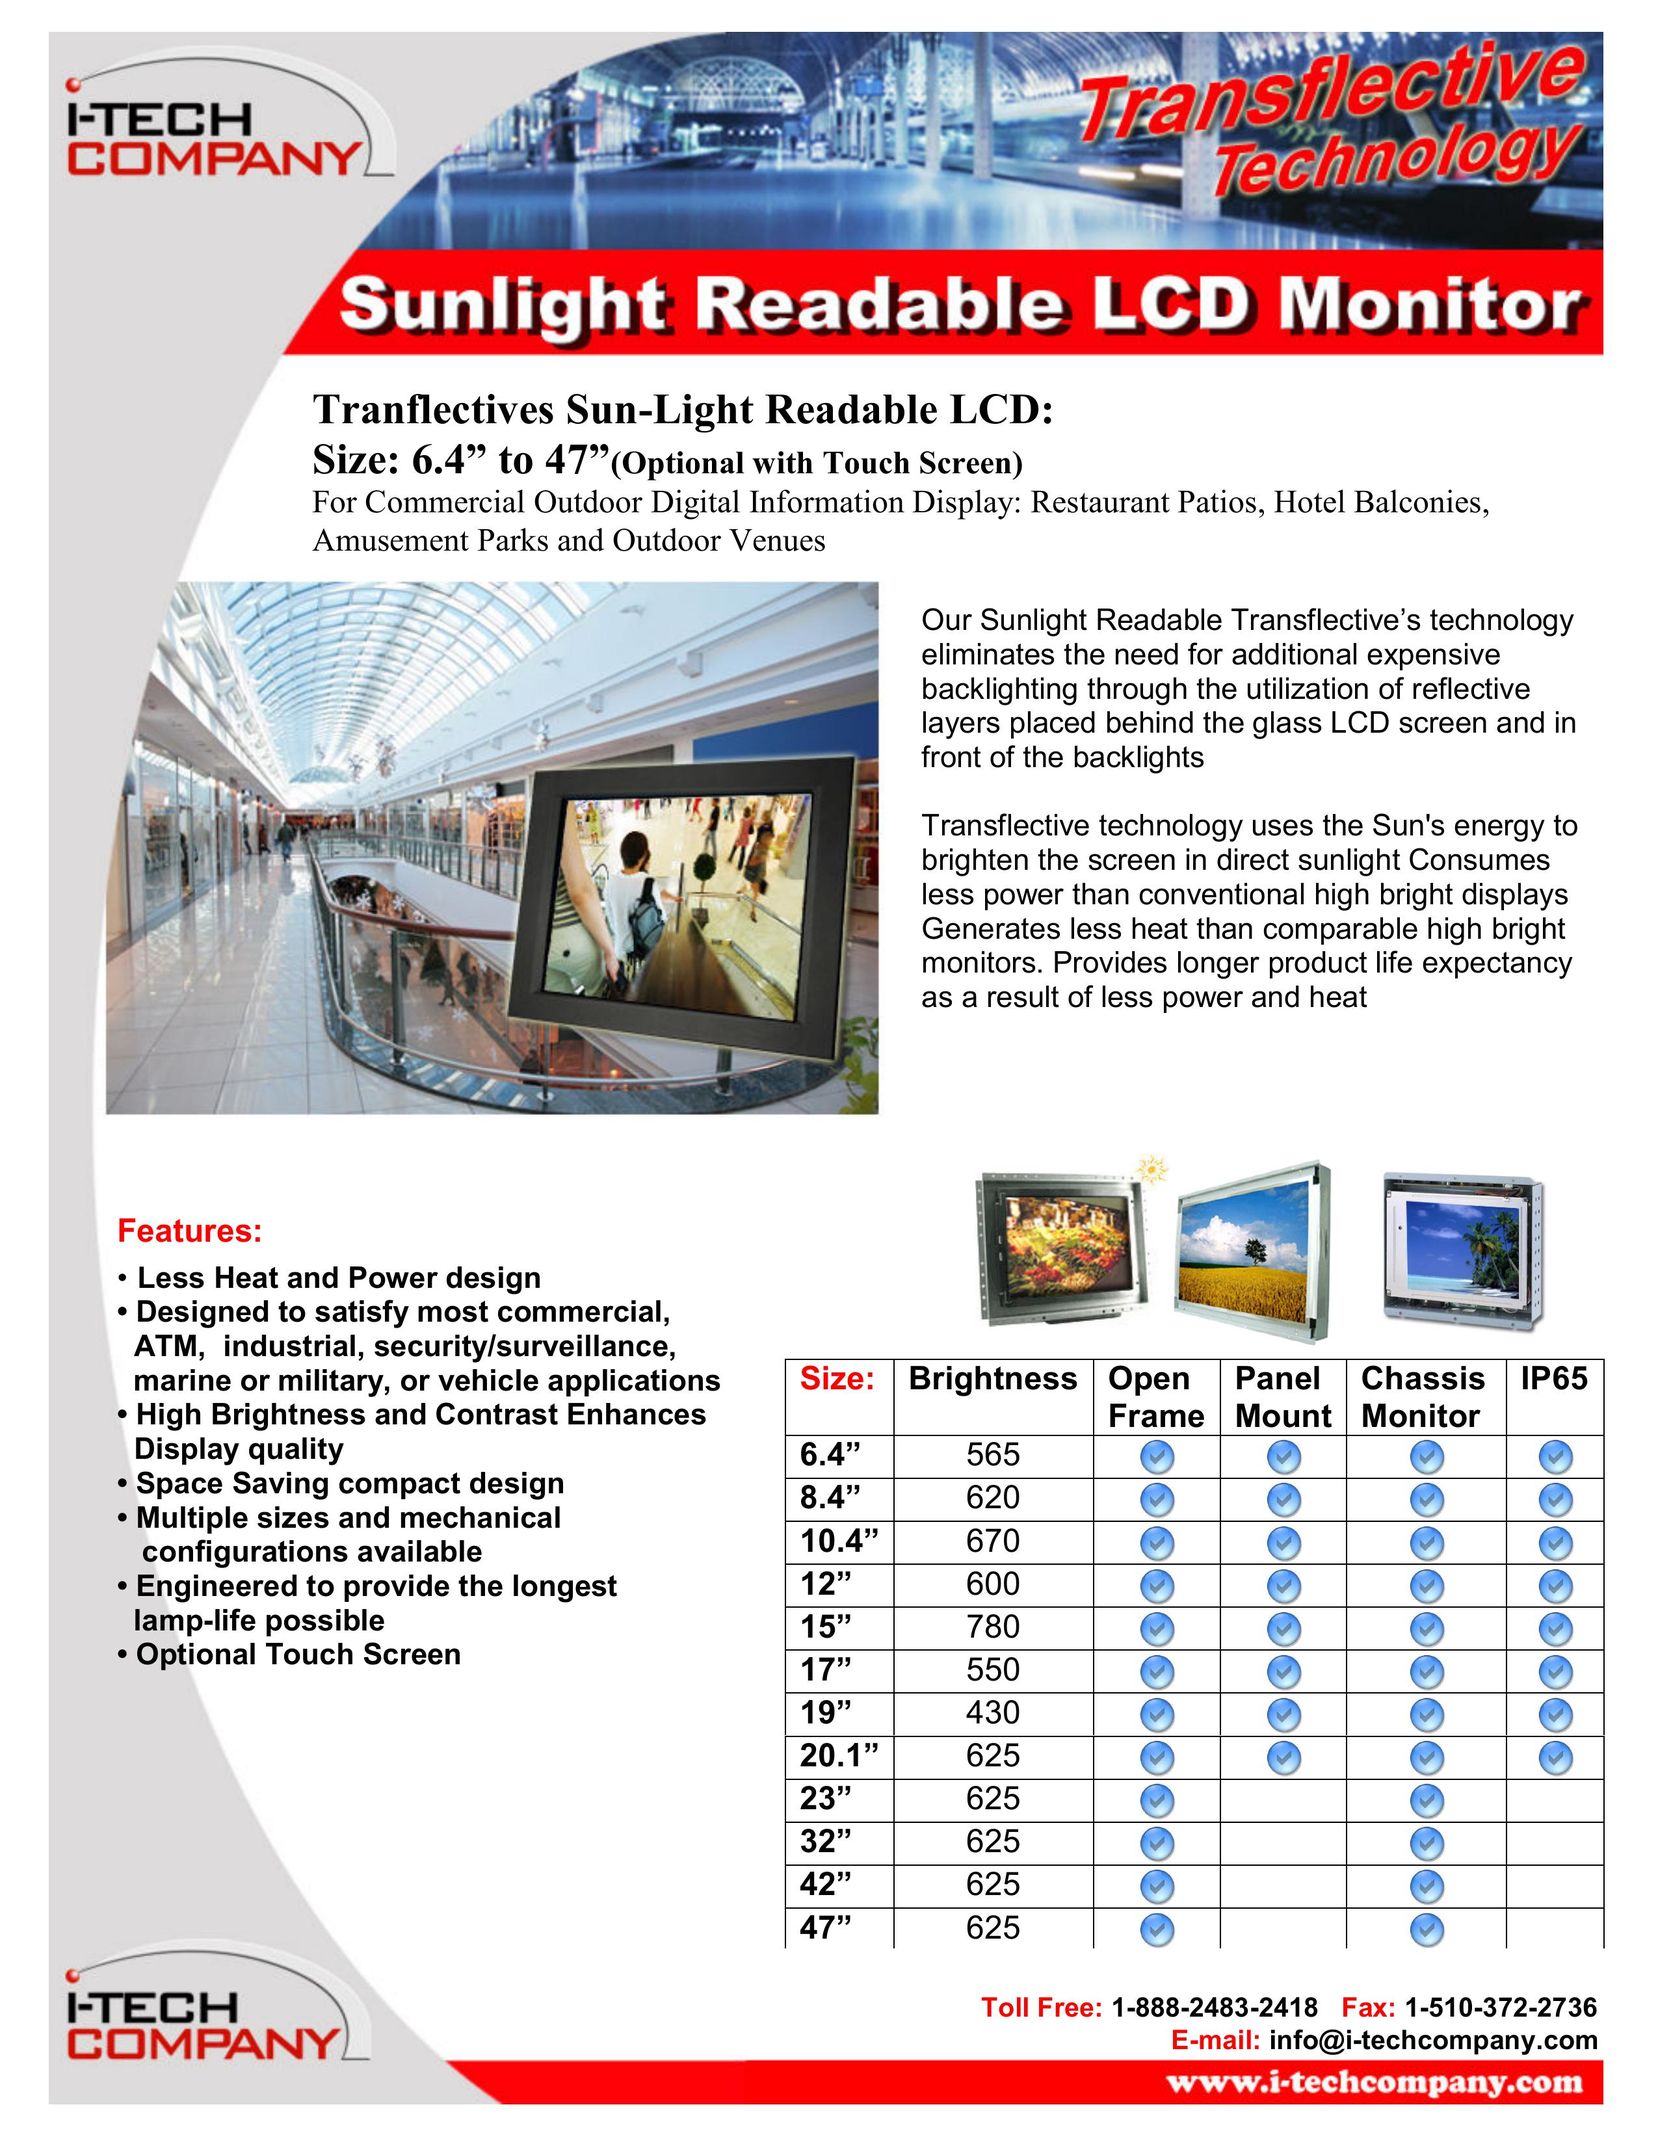 I-Tech Company Sunlight Readable LCD Monitor Computer Monitor User Manual